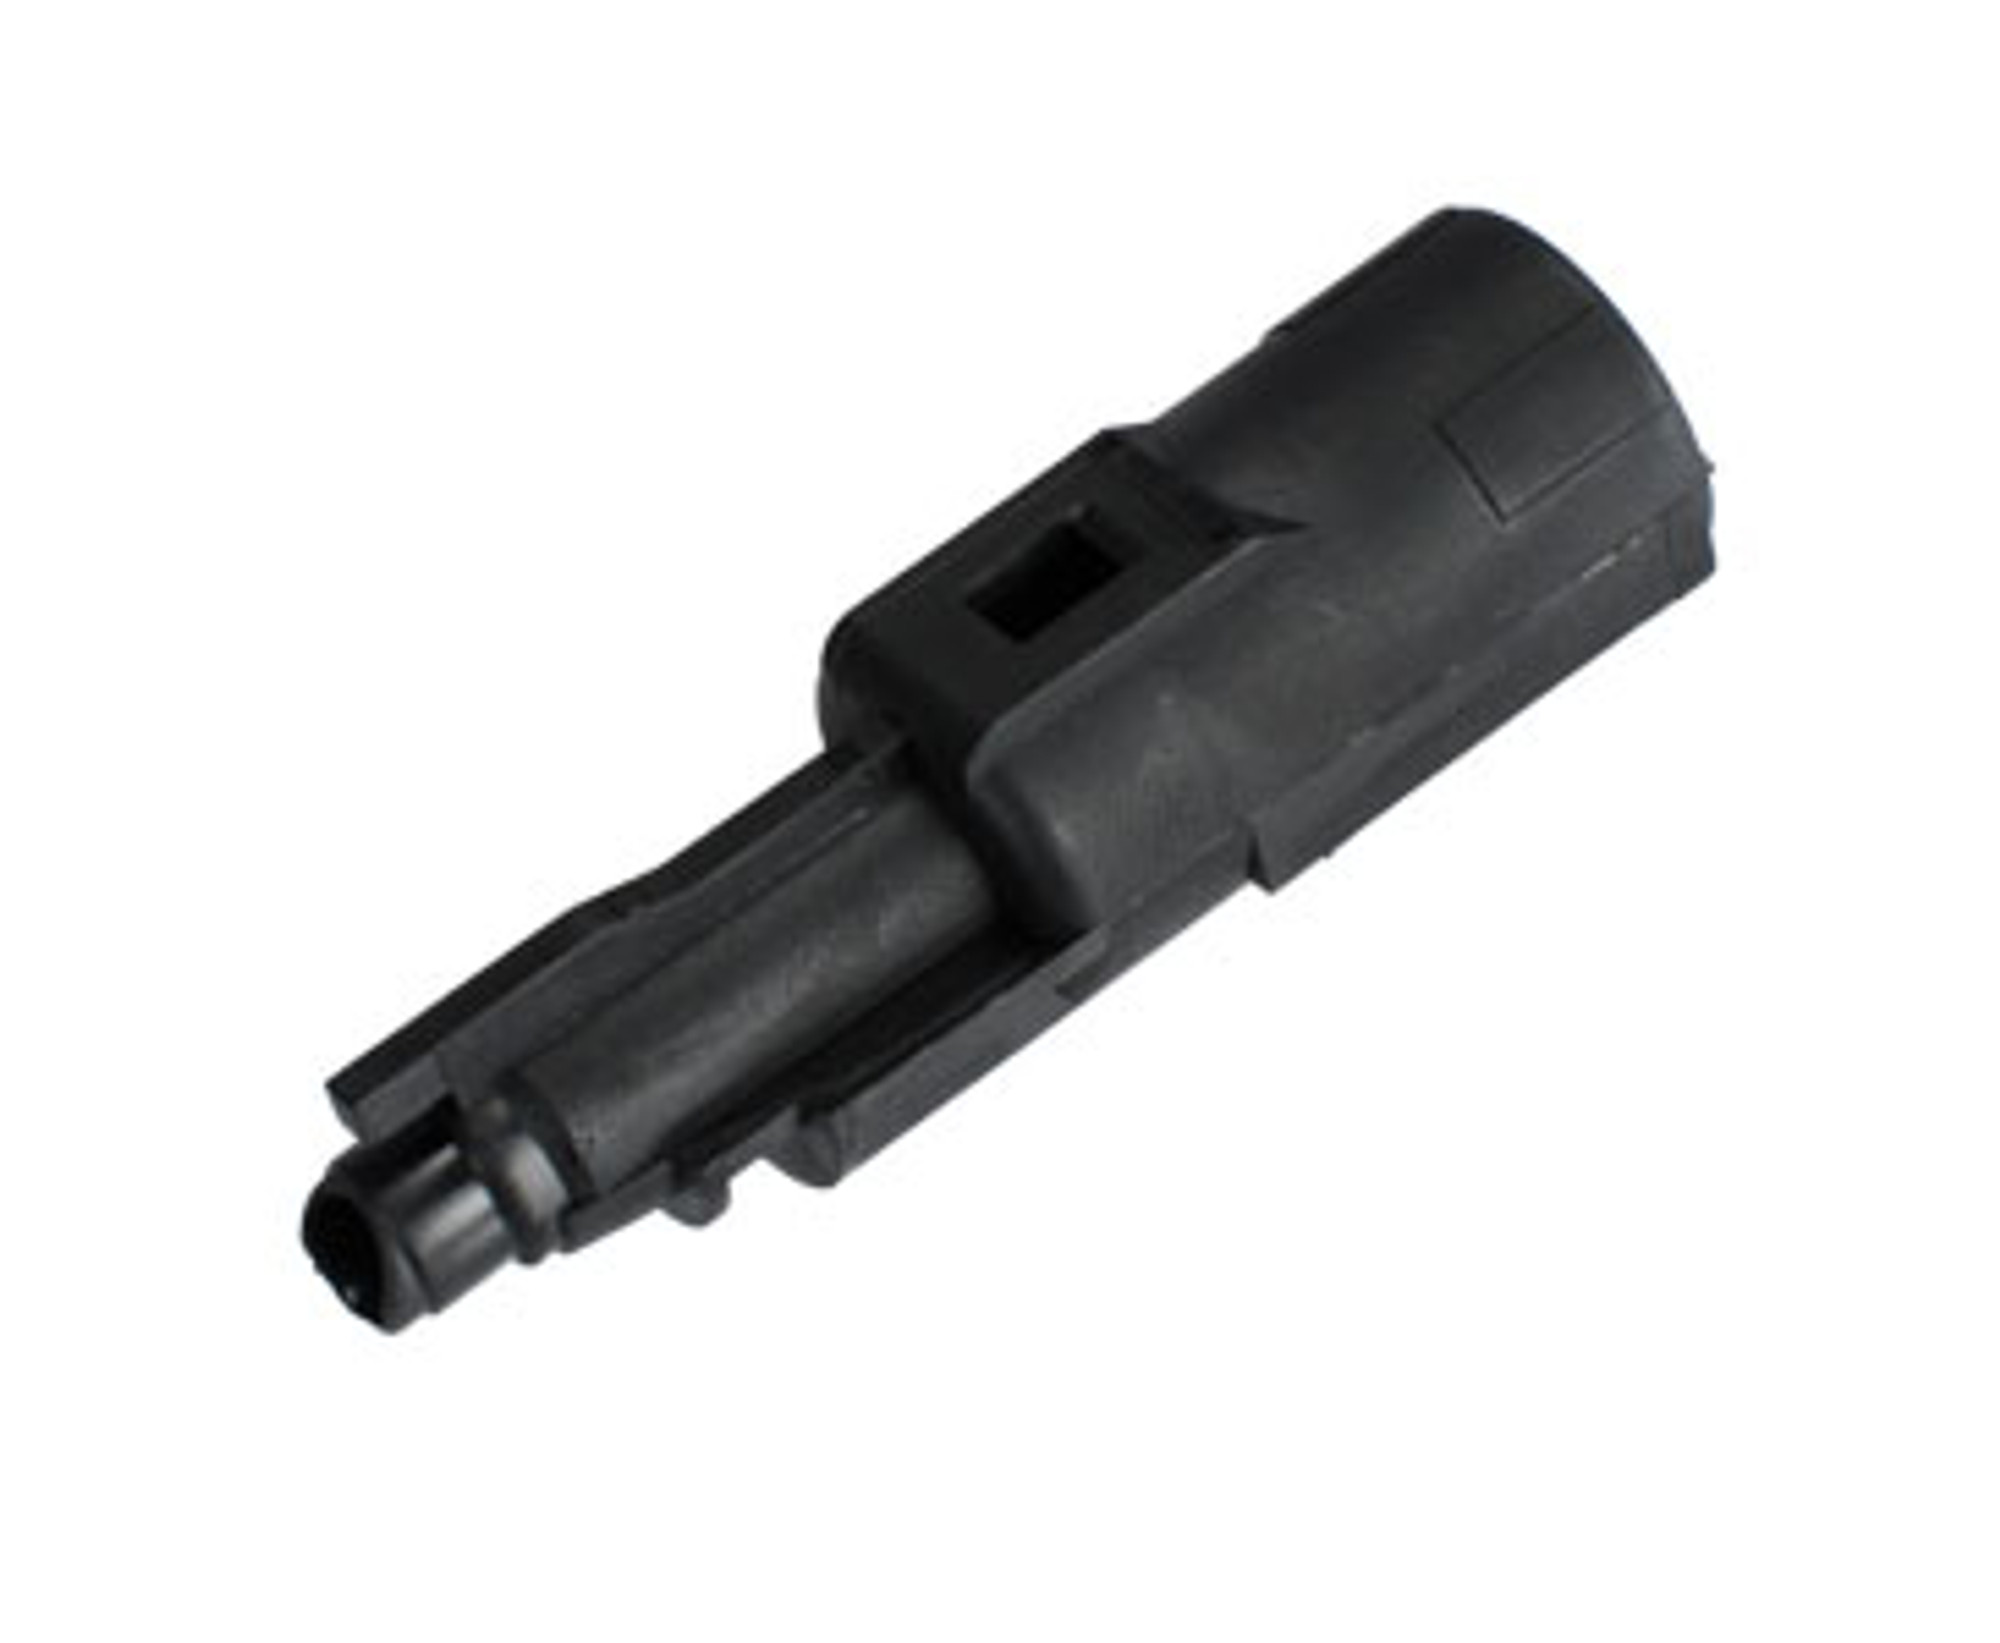 WE-Tech Blowback Nozzle Set for WE18C Airsoft GBB Series Pistol